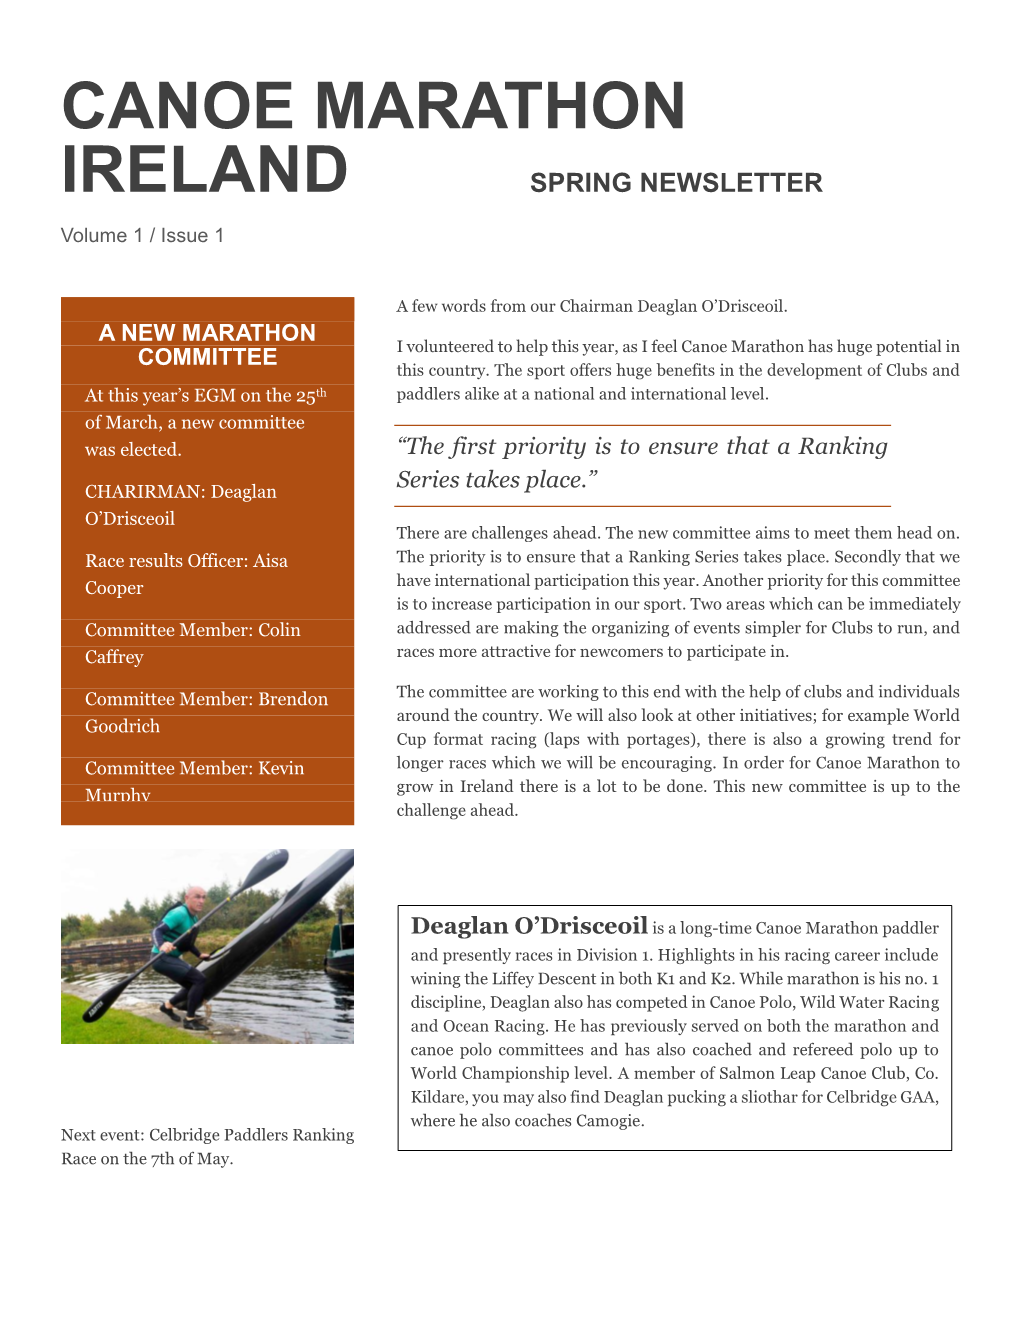 Canoe Marathon Ireland Spring Newsletter